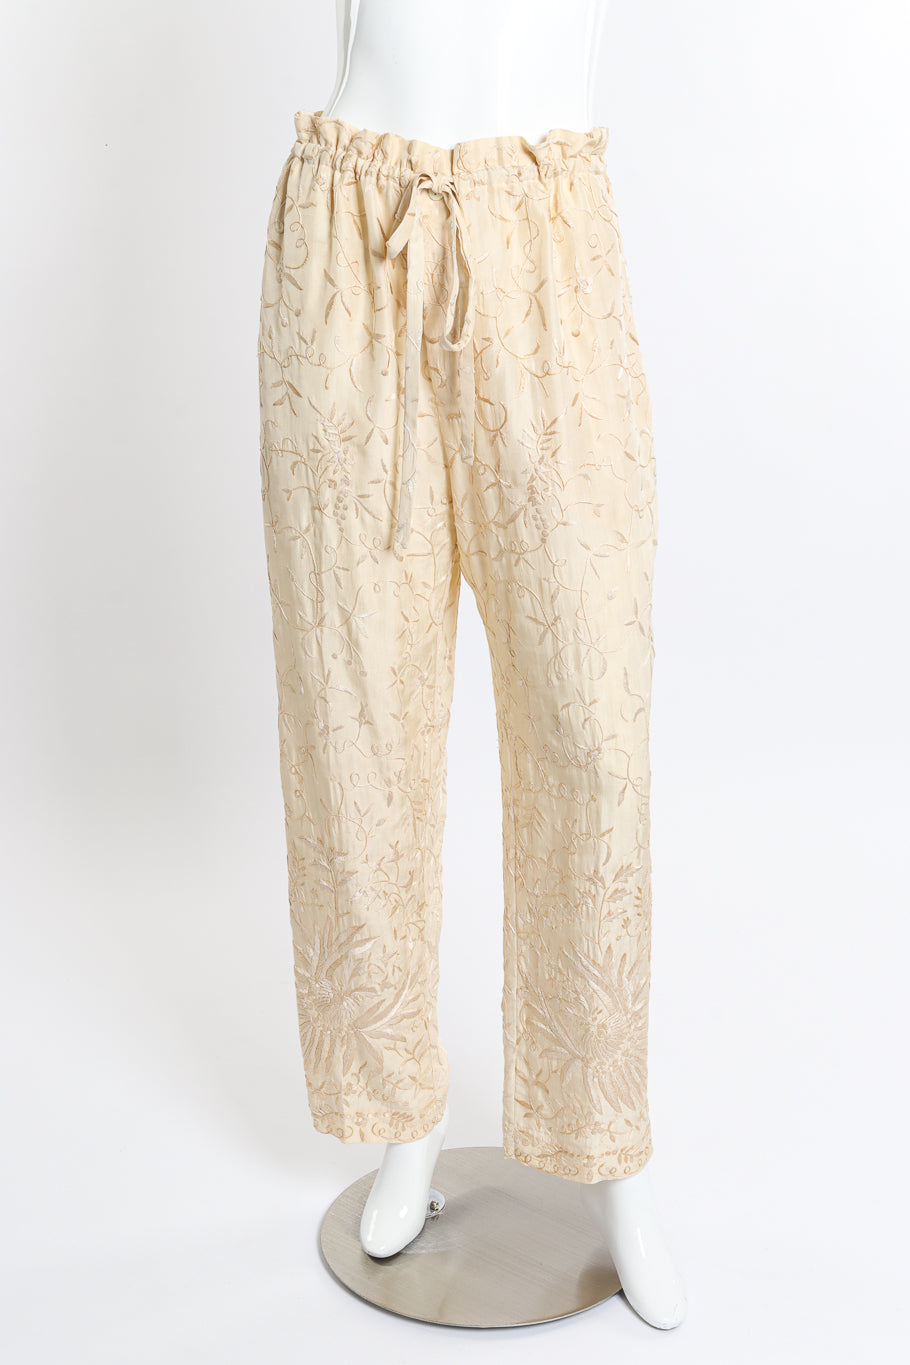 Vintage Donna Karan Embroidered Top & Pant Set pant front on mannequin @recess la